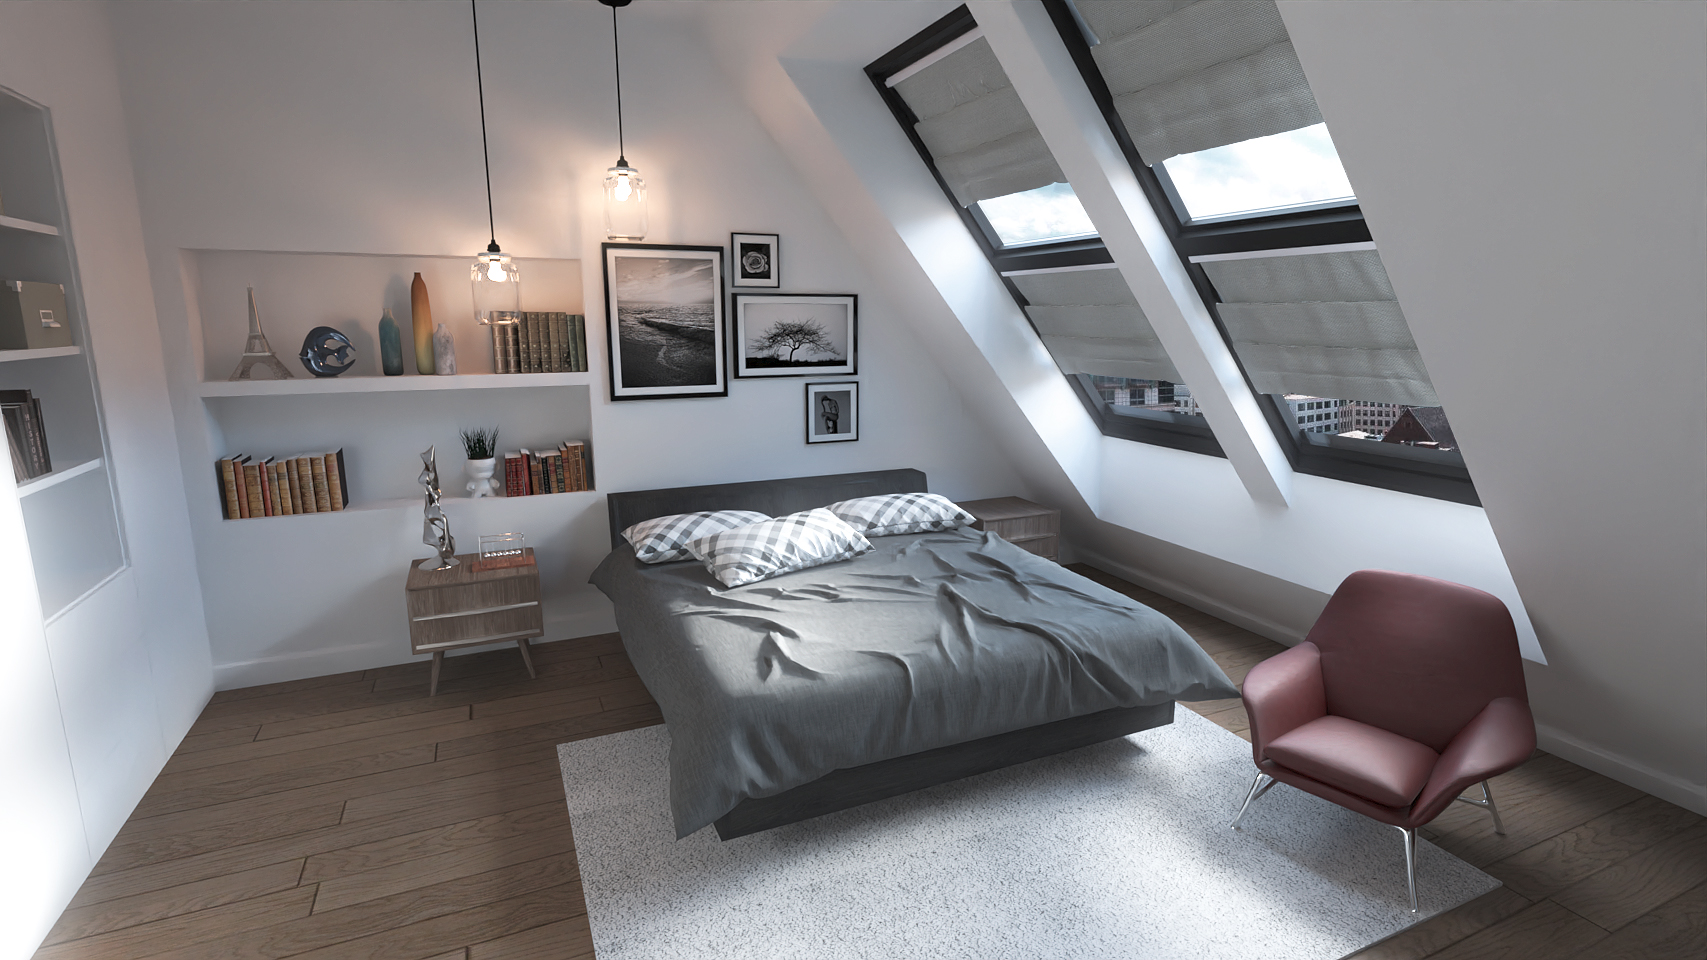 Attic Bedroom by: Digitallab3D, 3D Models by Daz 3D